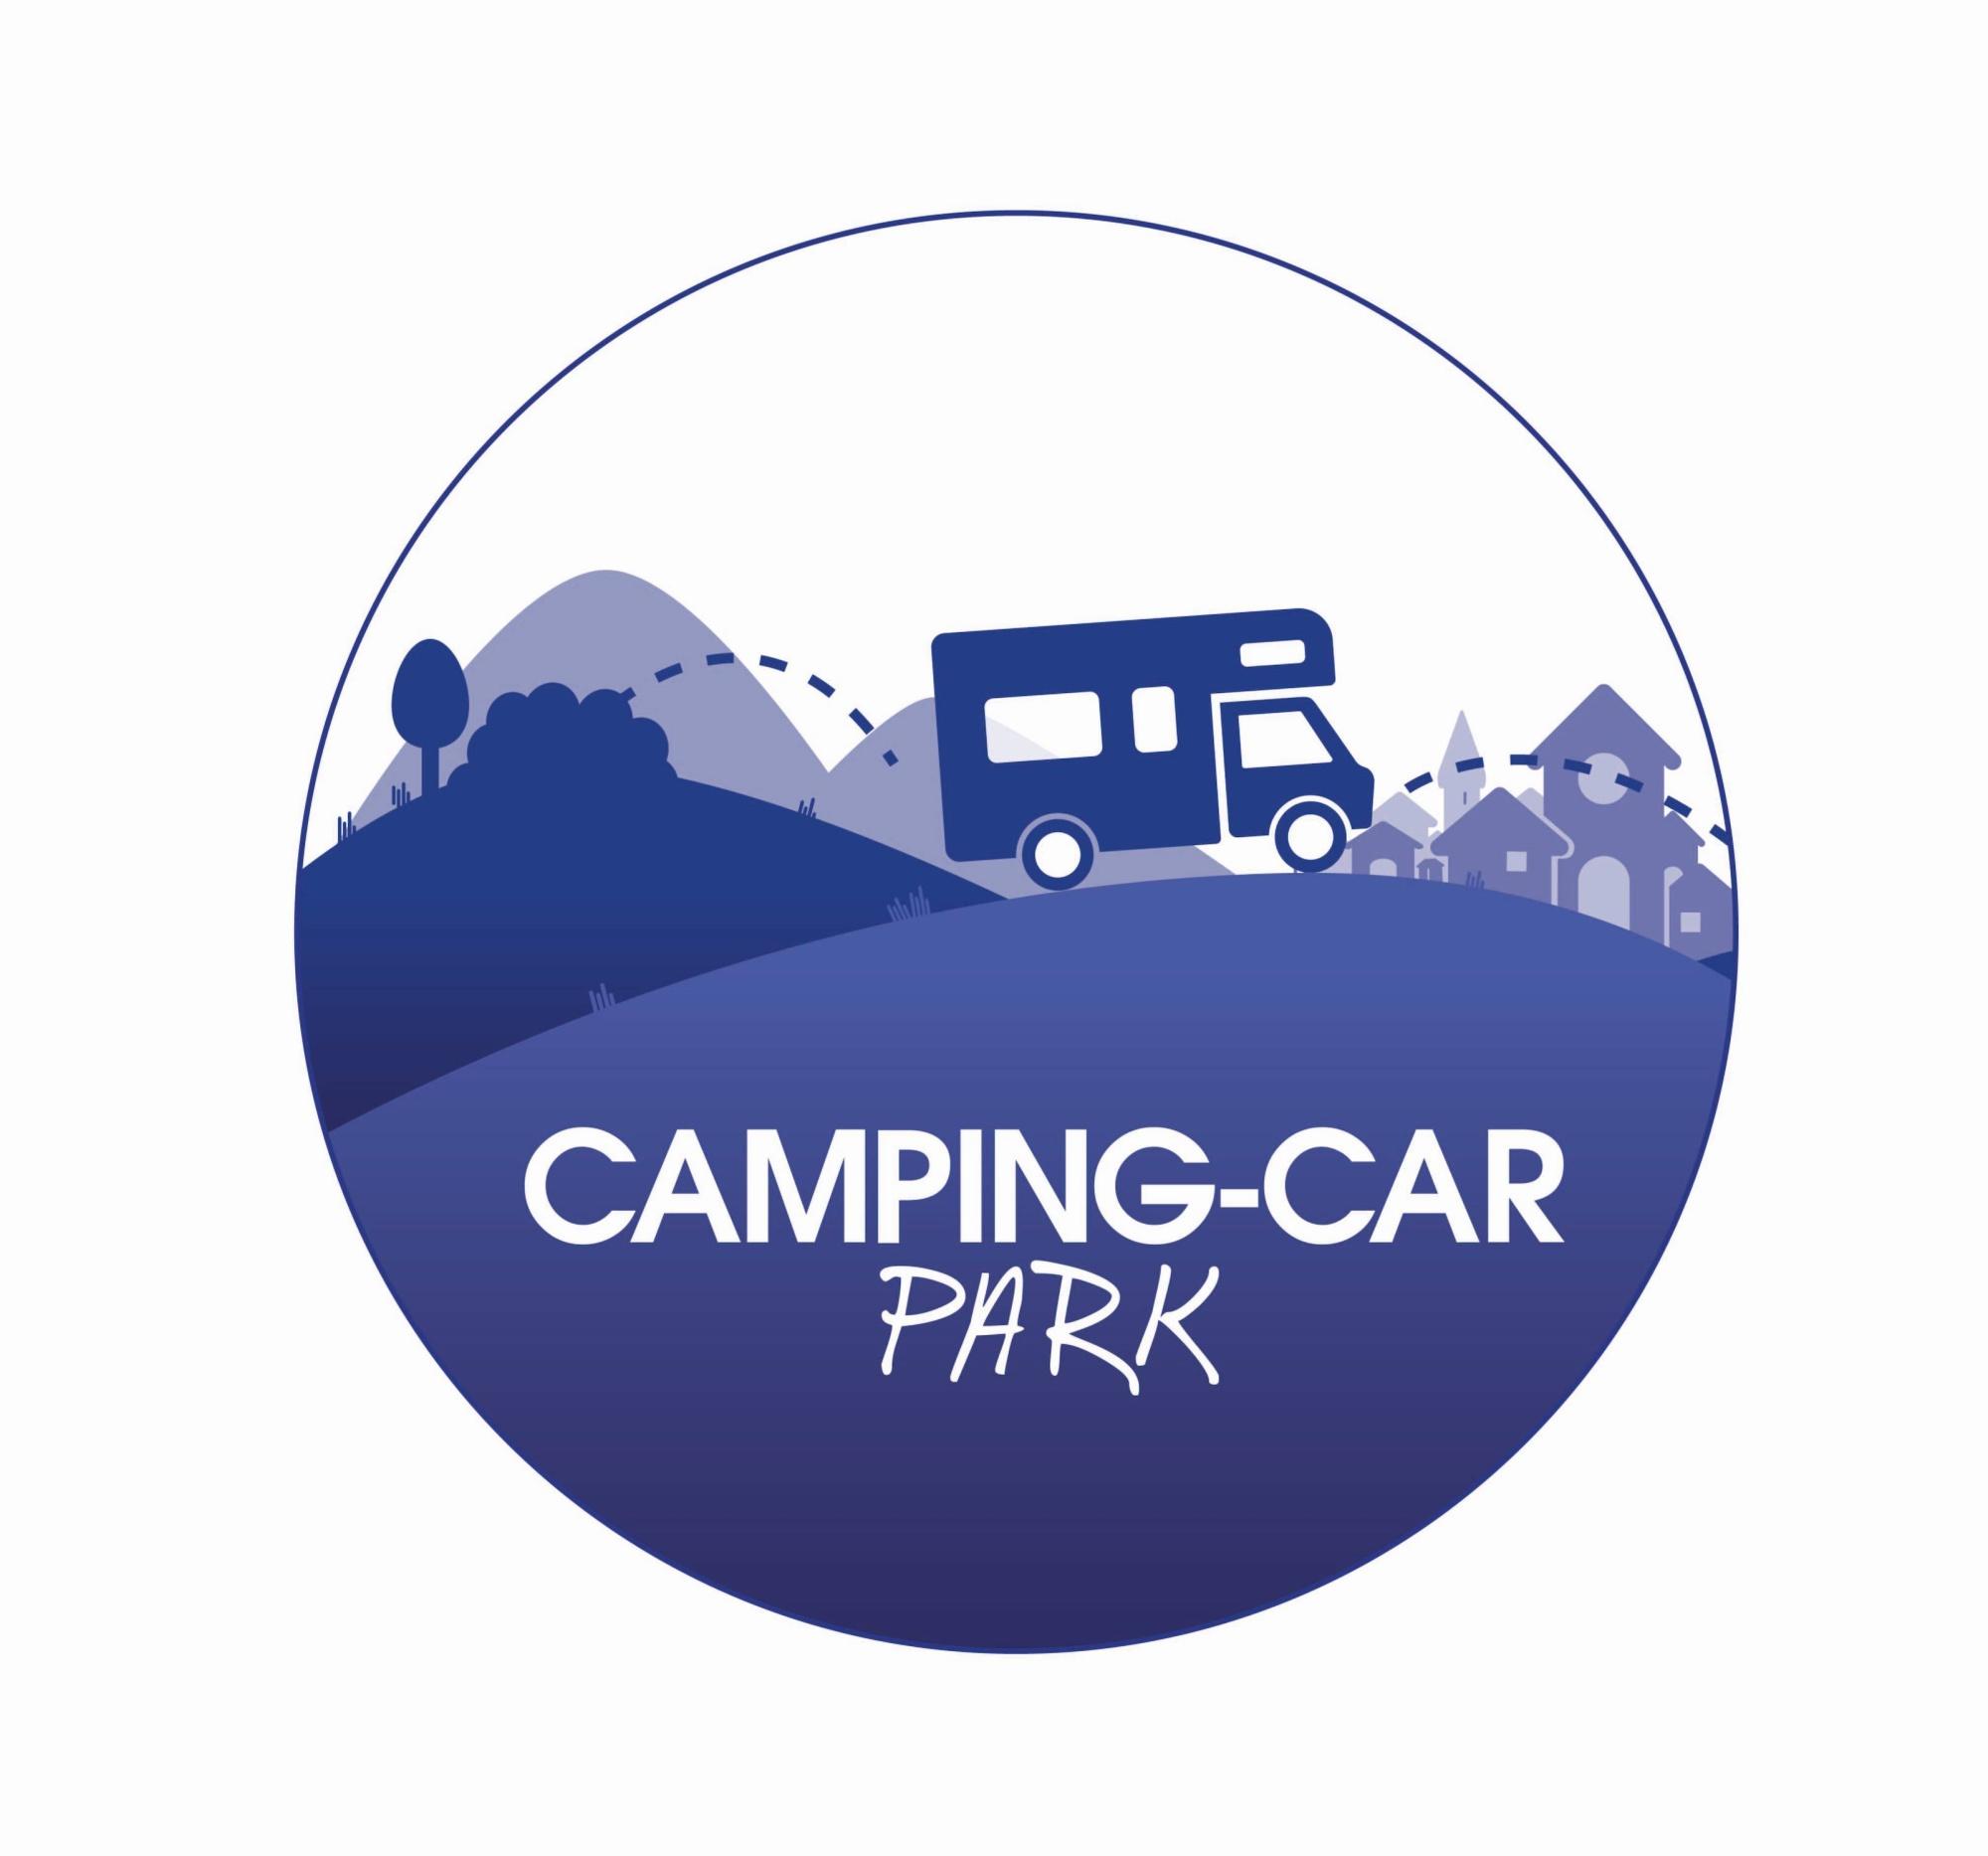 Camping-car Park Merlimont